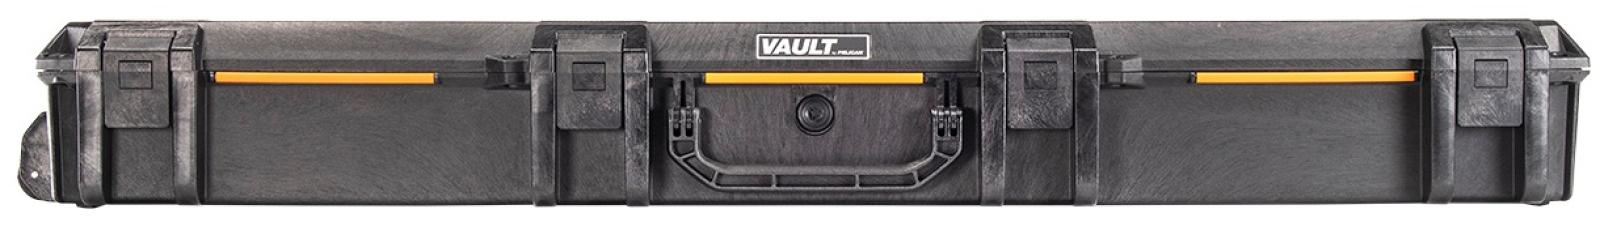 Pelican V800 Vault Double Rifle Case